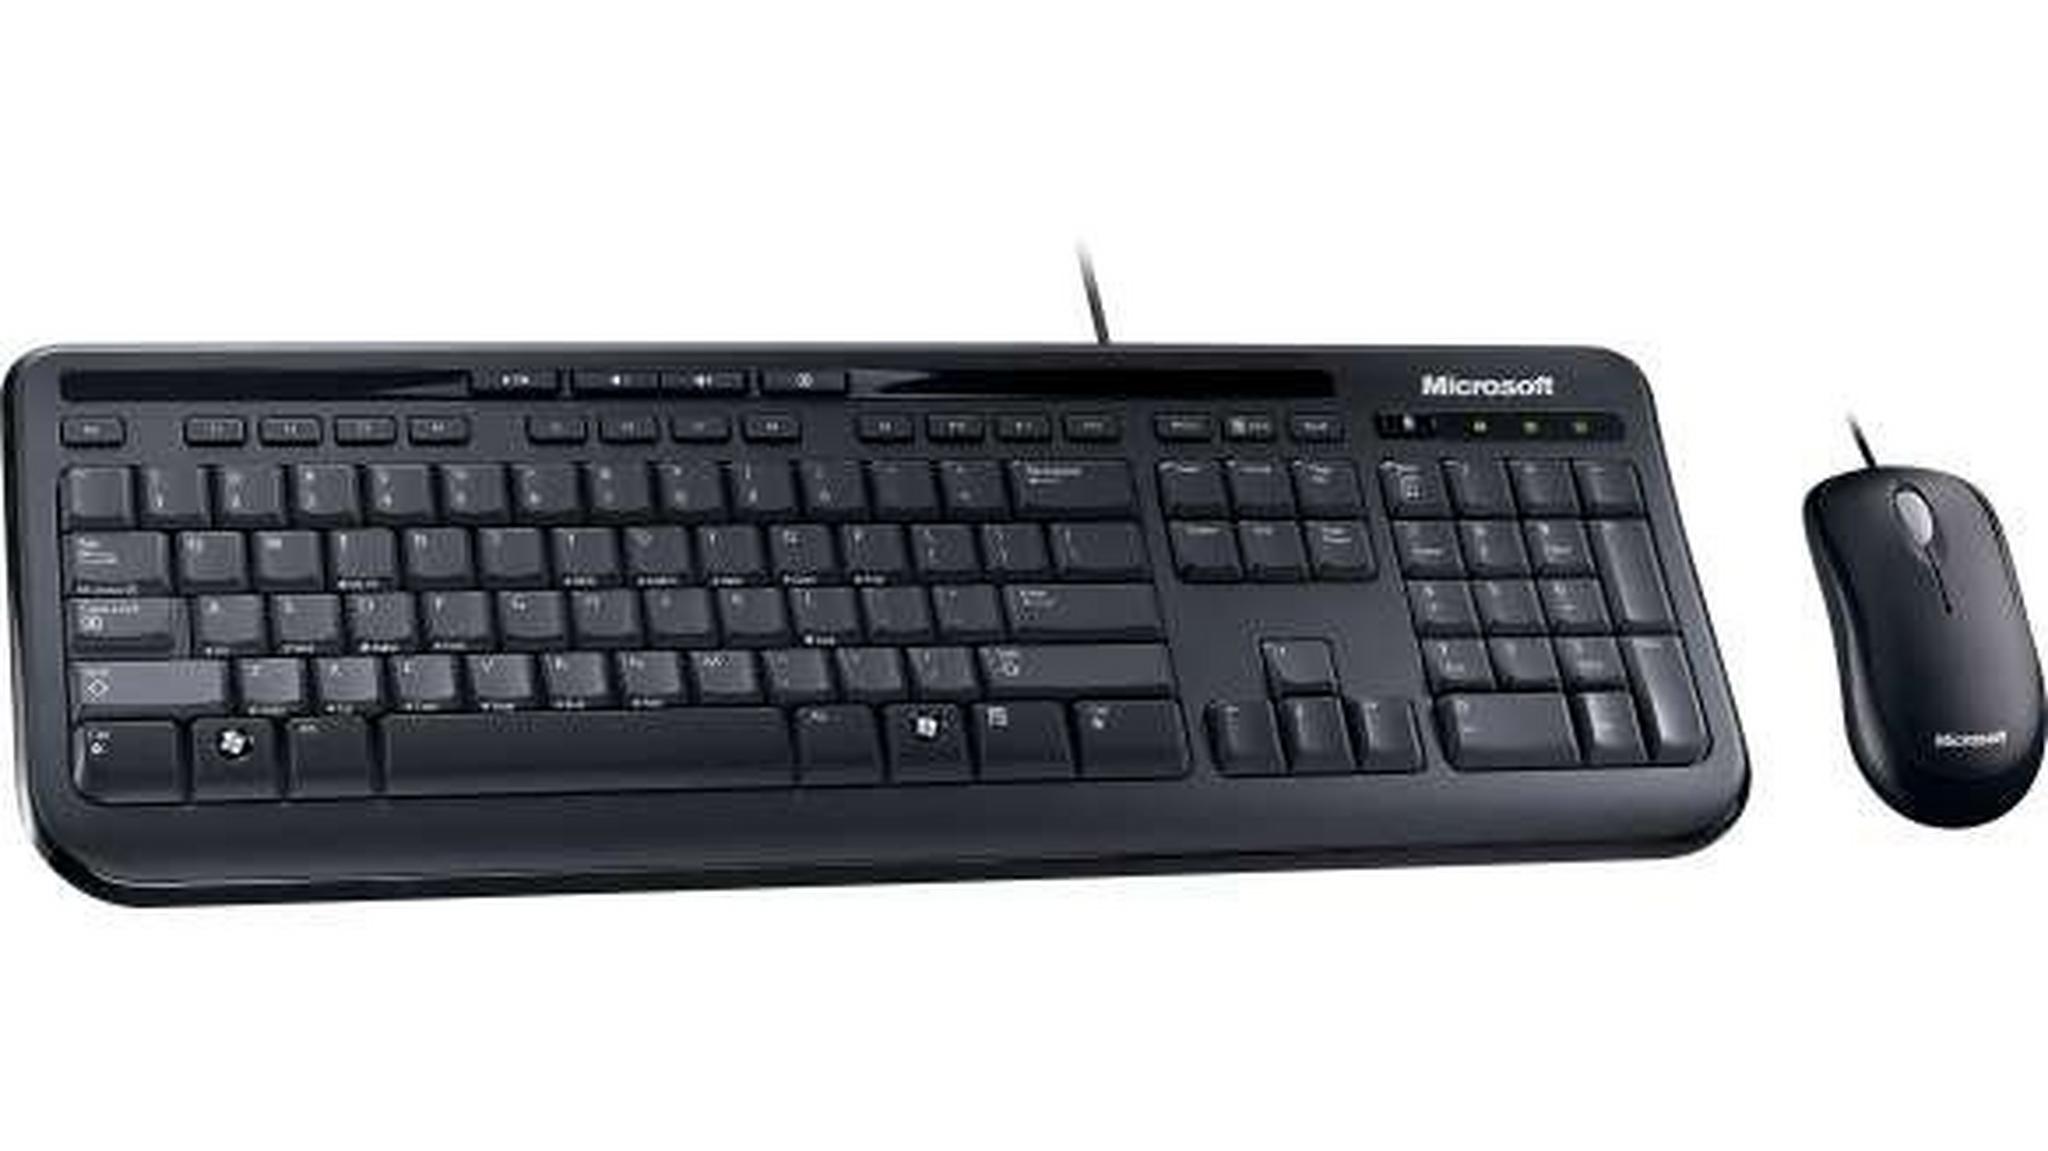 Microsoft Wired Desktop 600 Mouse & Keyboard Kit (APB-00012) - Black